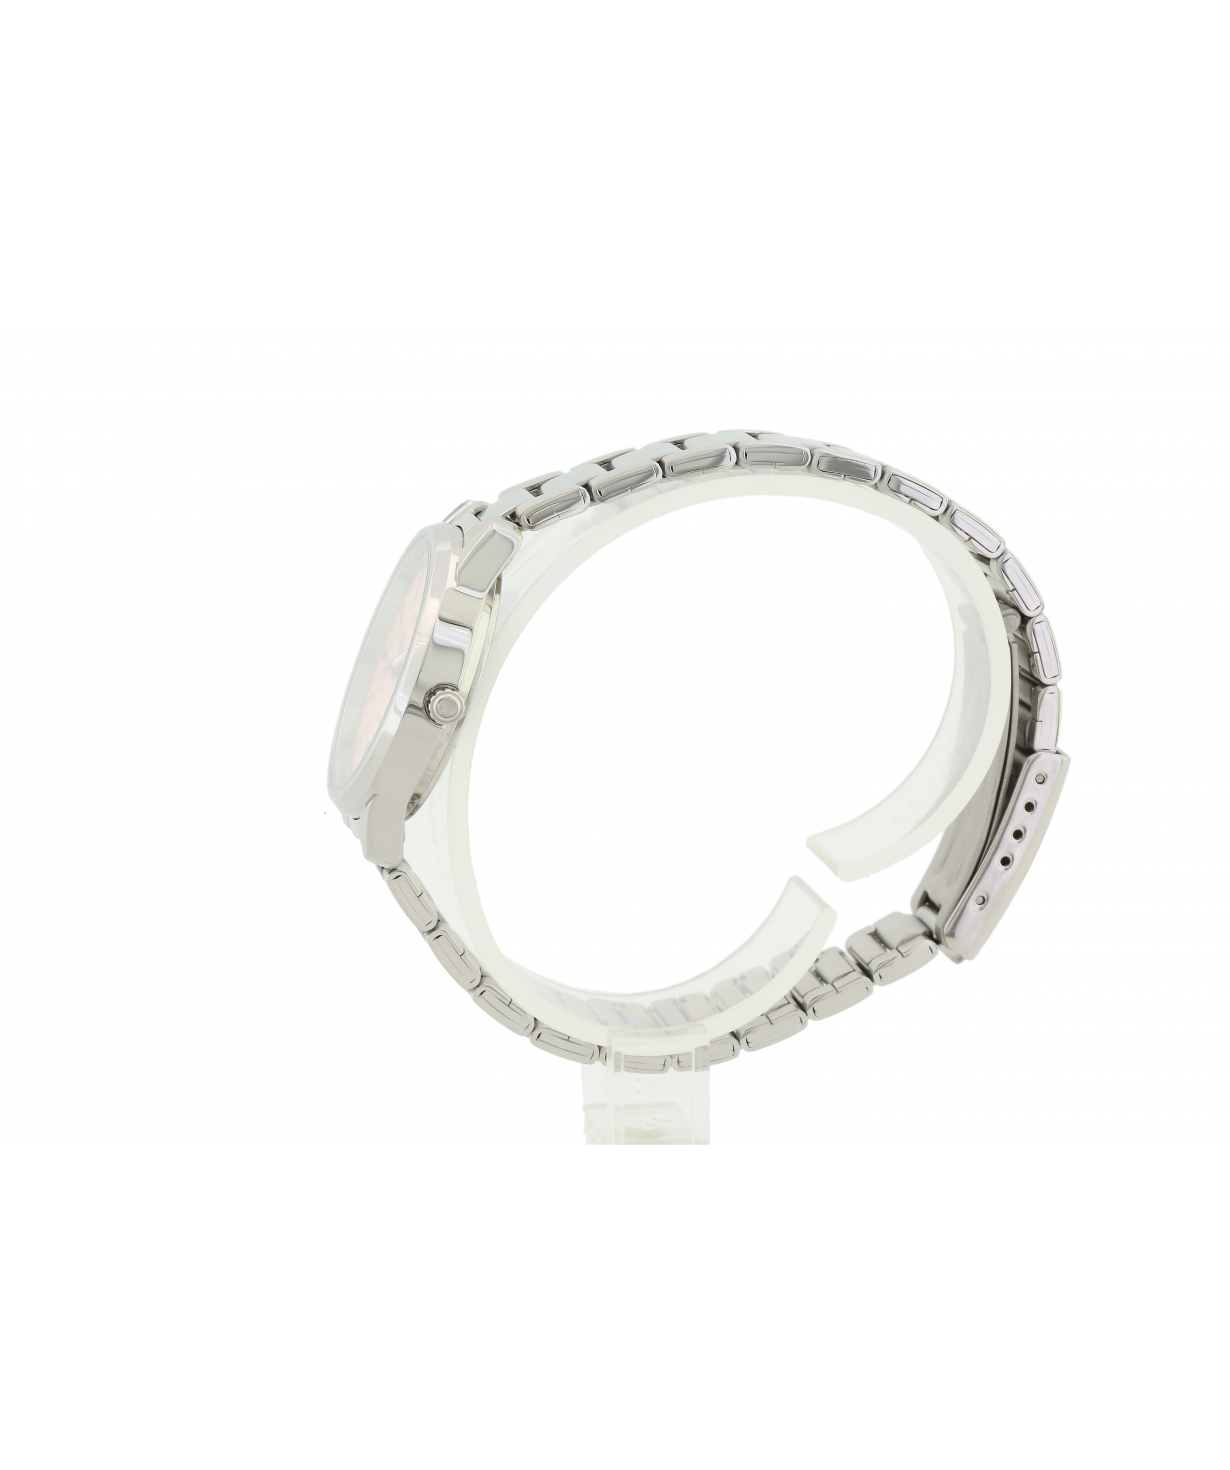 Wristwatch `Casio` LTP-1303D-4AVDF